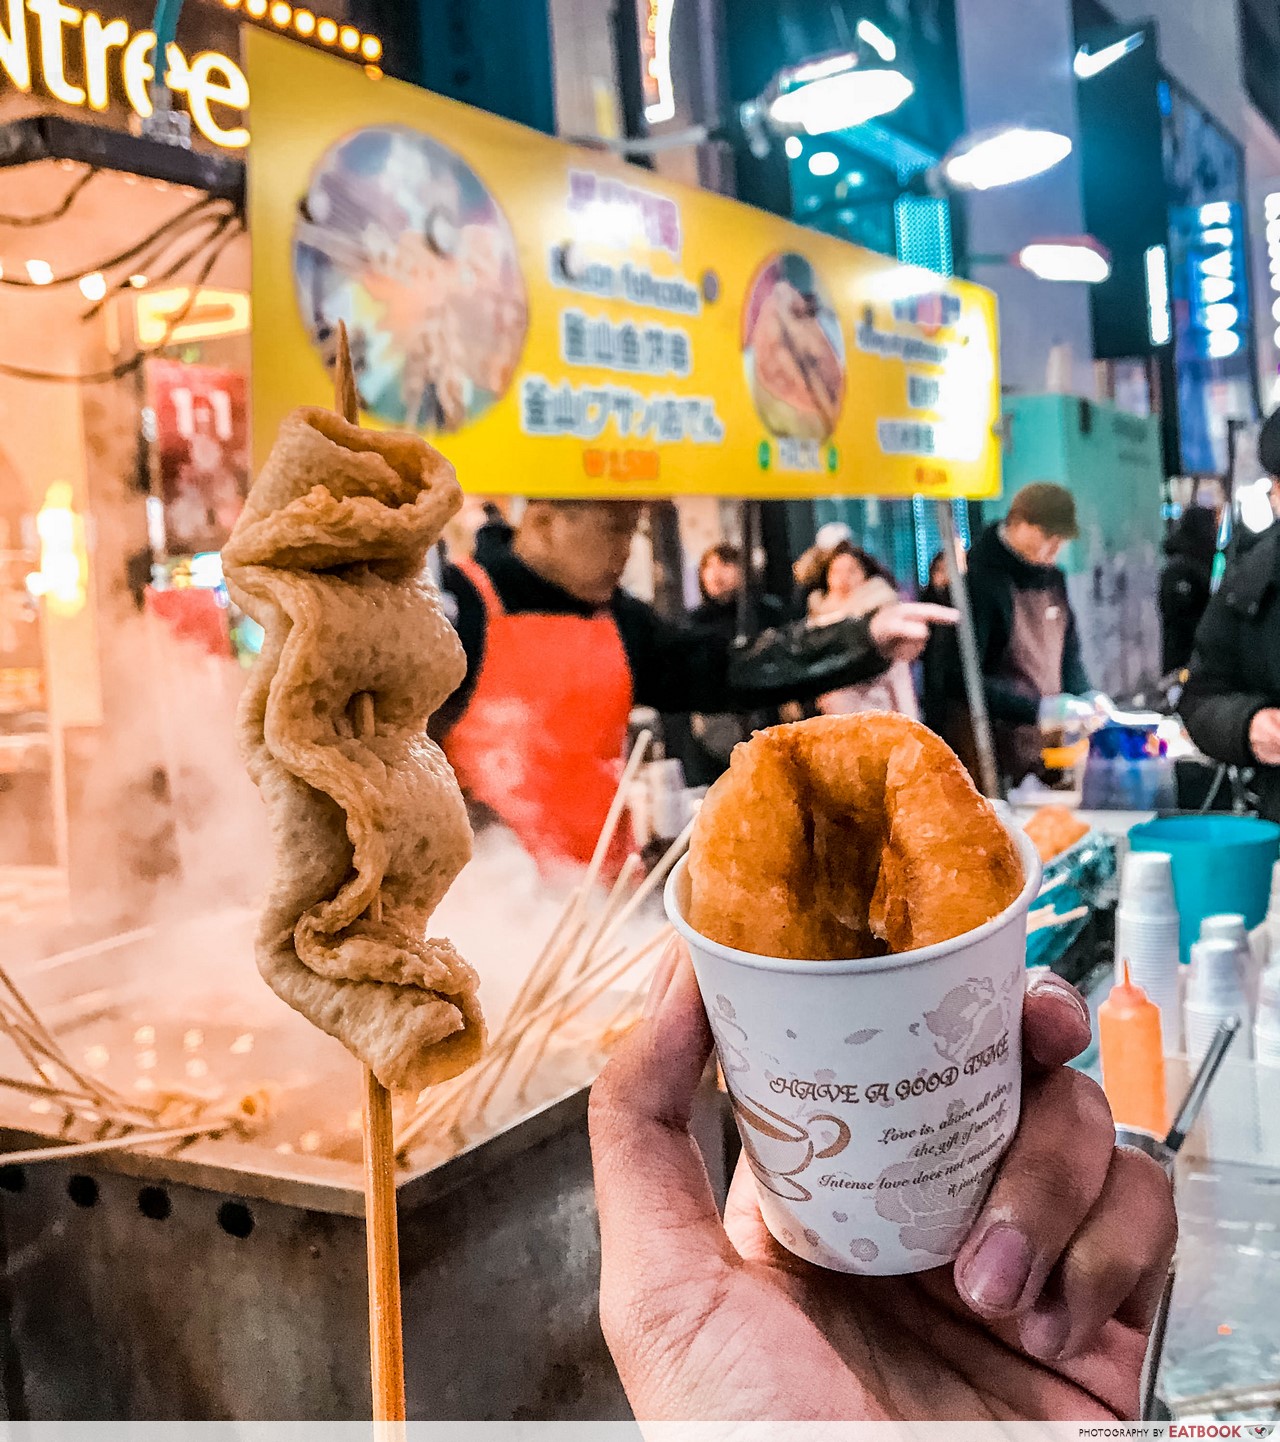 Halal Food places In Seoul - Fishcake and Sweet pancake stall